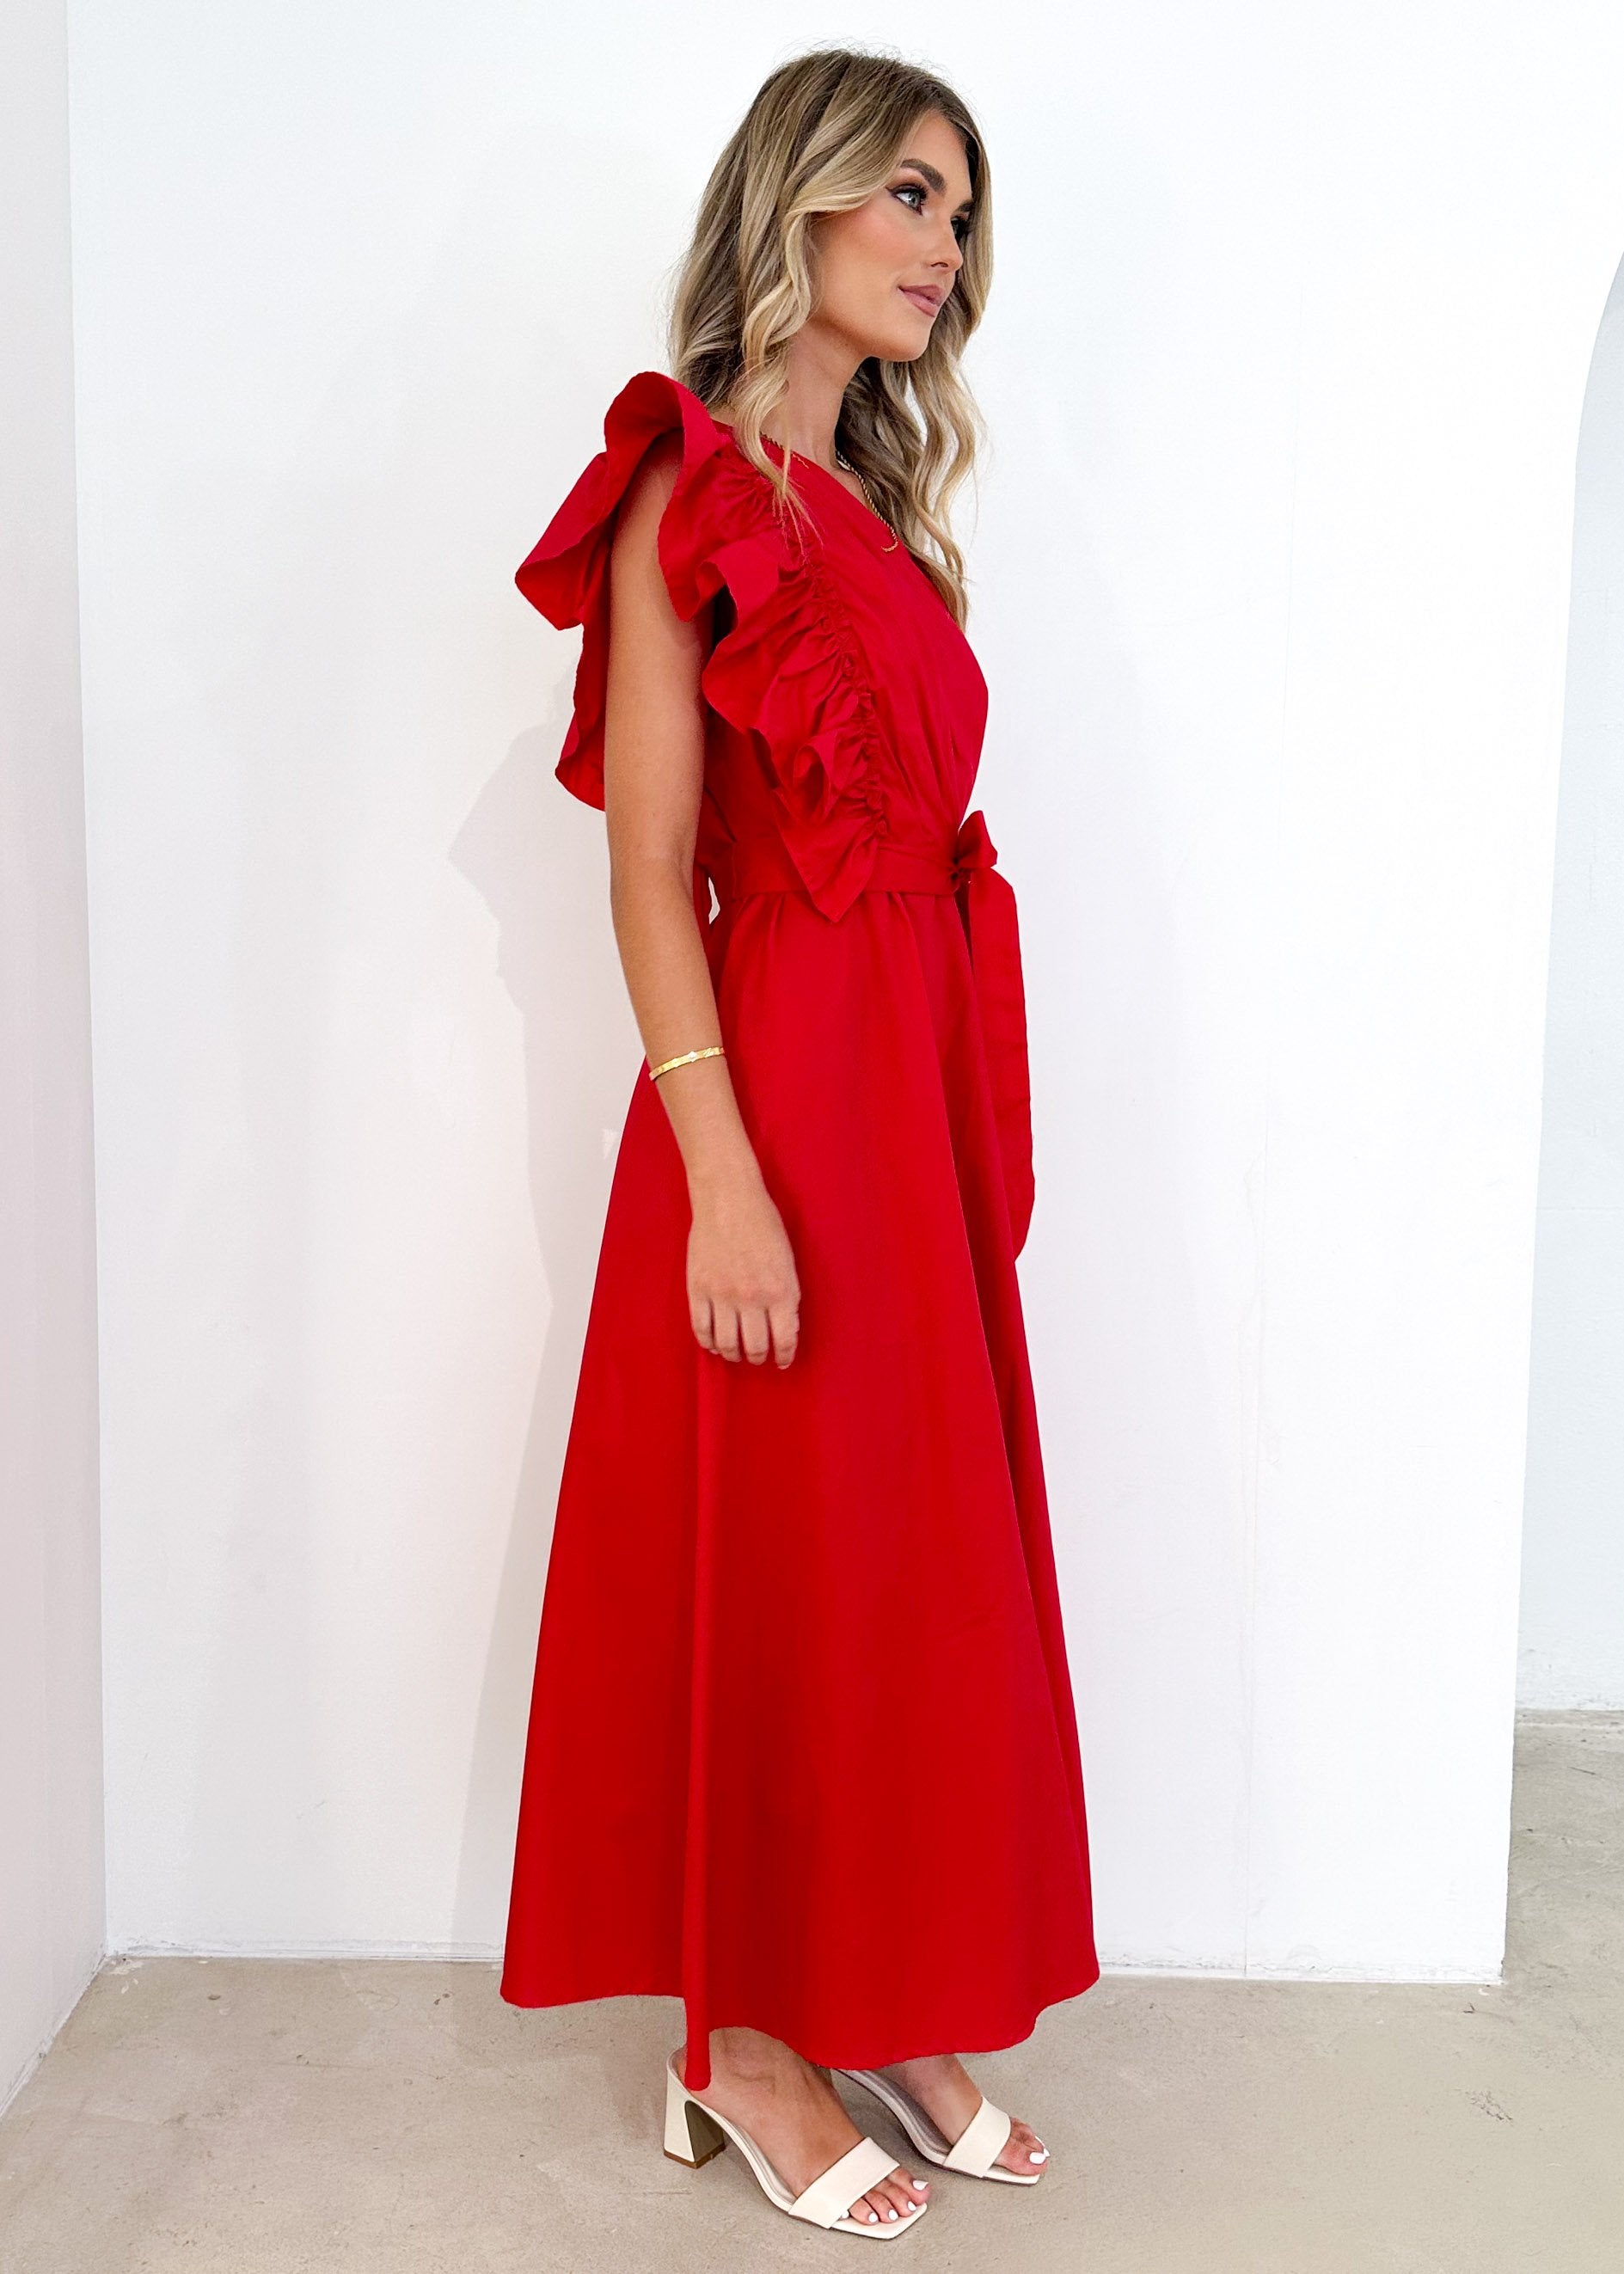 Rowler One Shoulder Midi Dress - Red